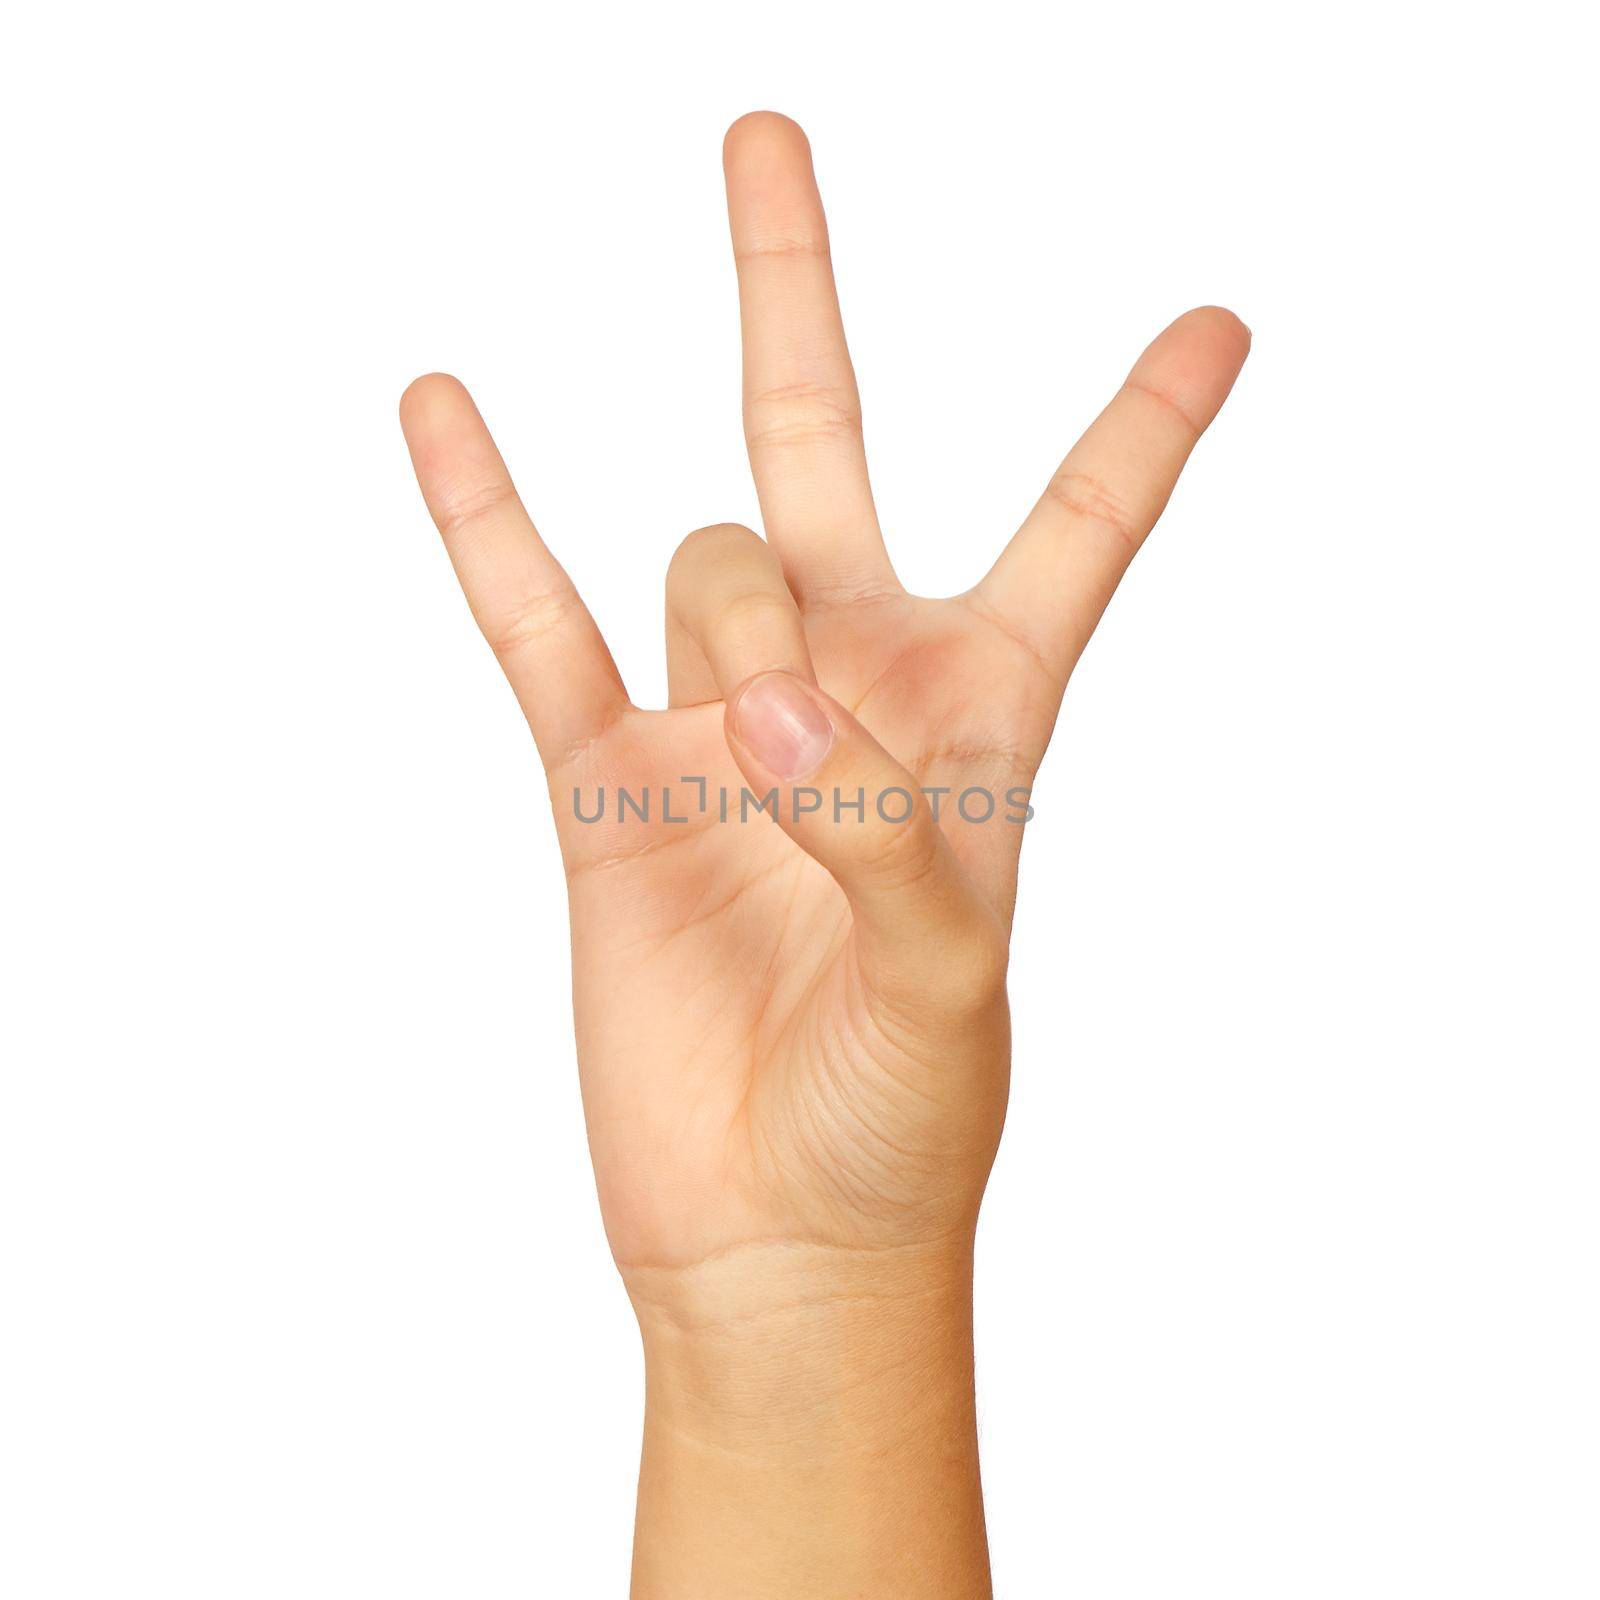 american sign language number 7 by raddnatt